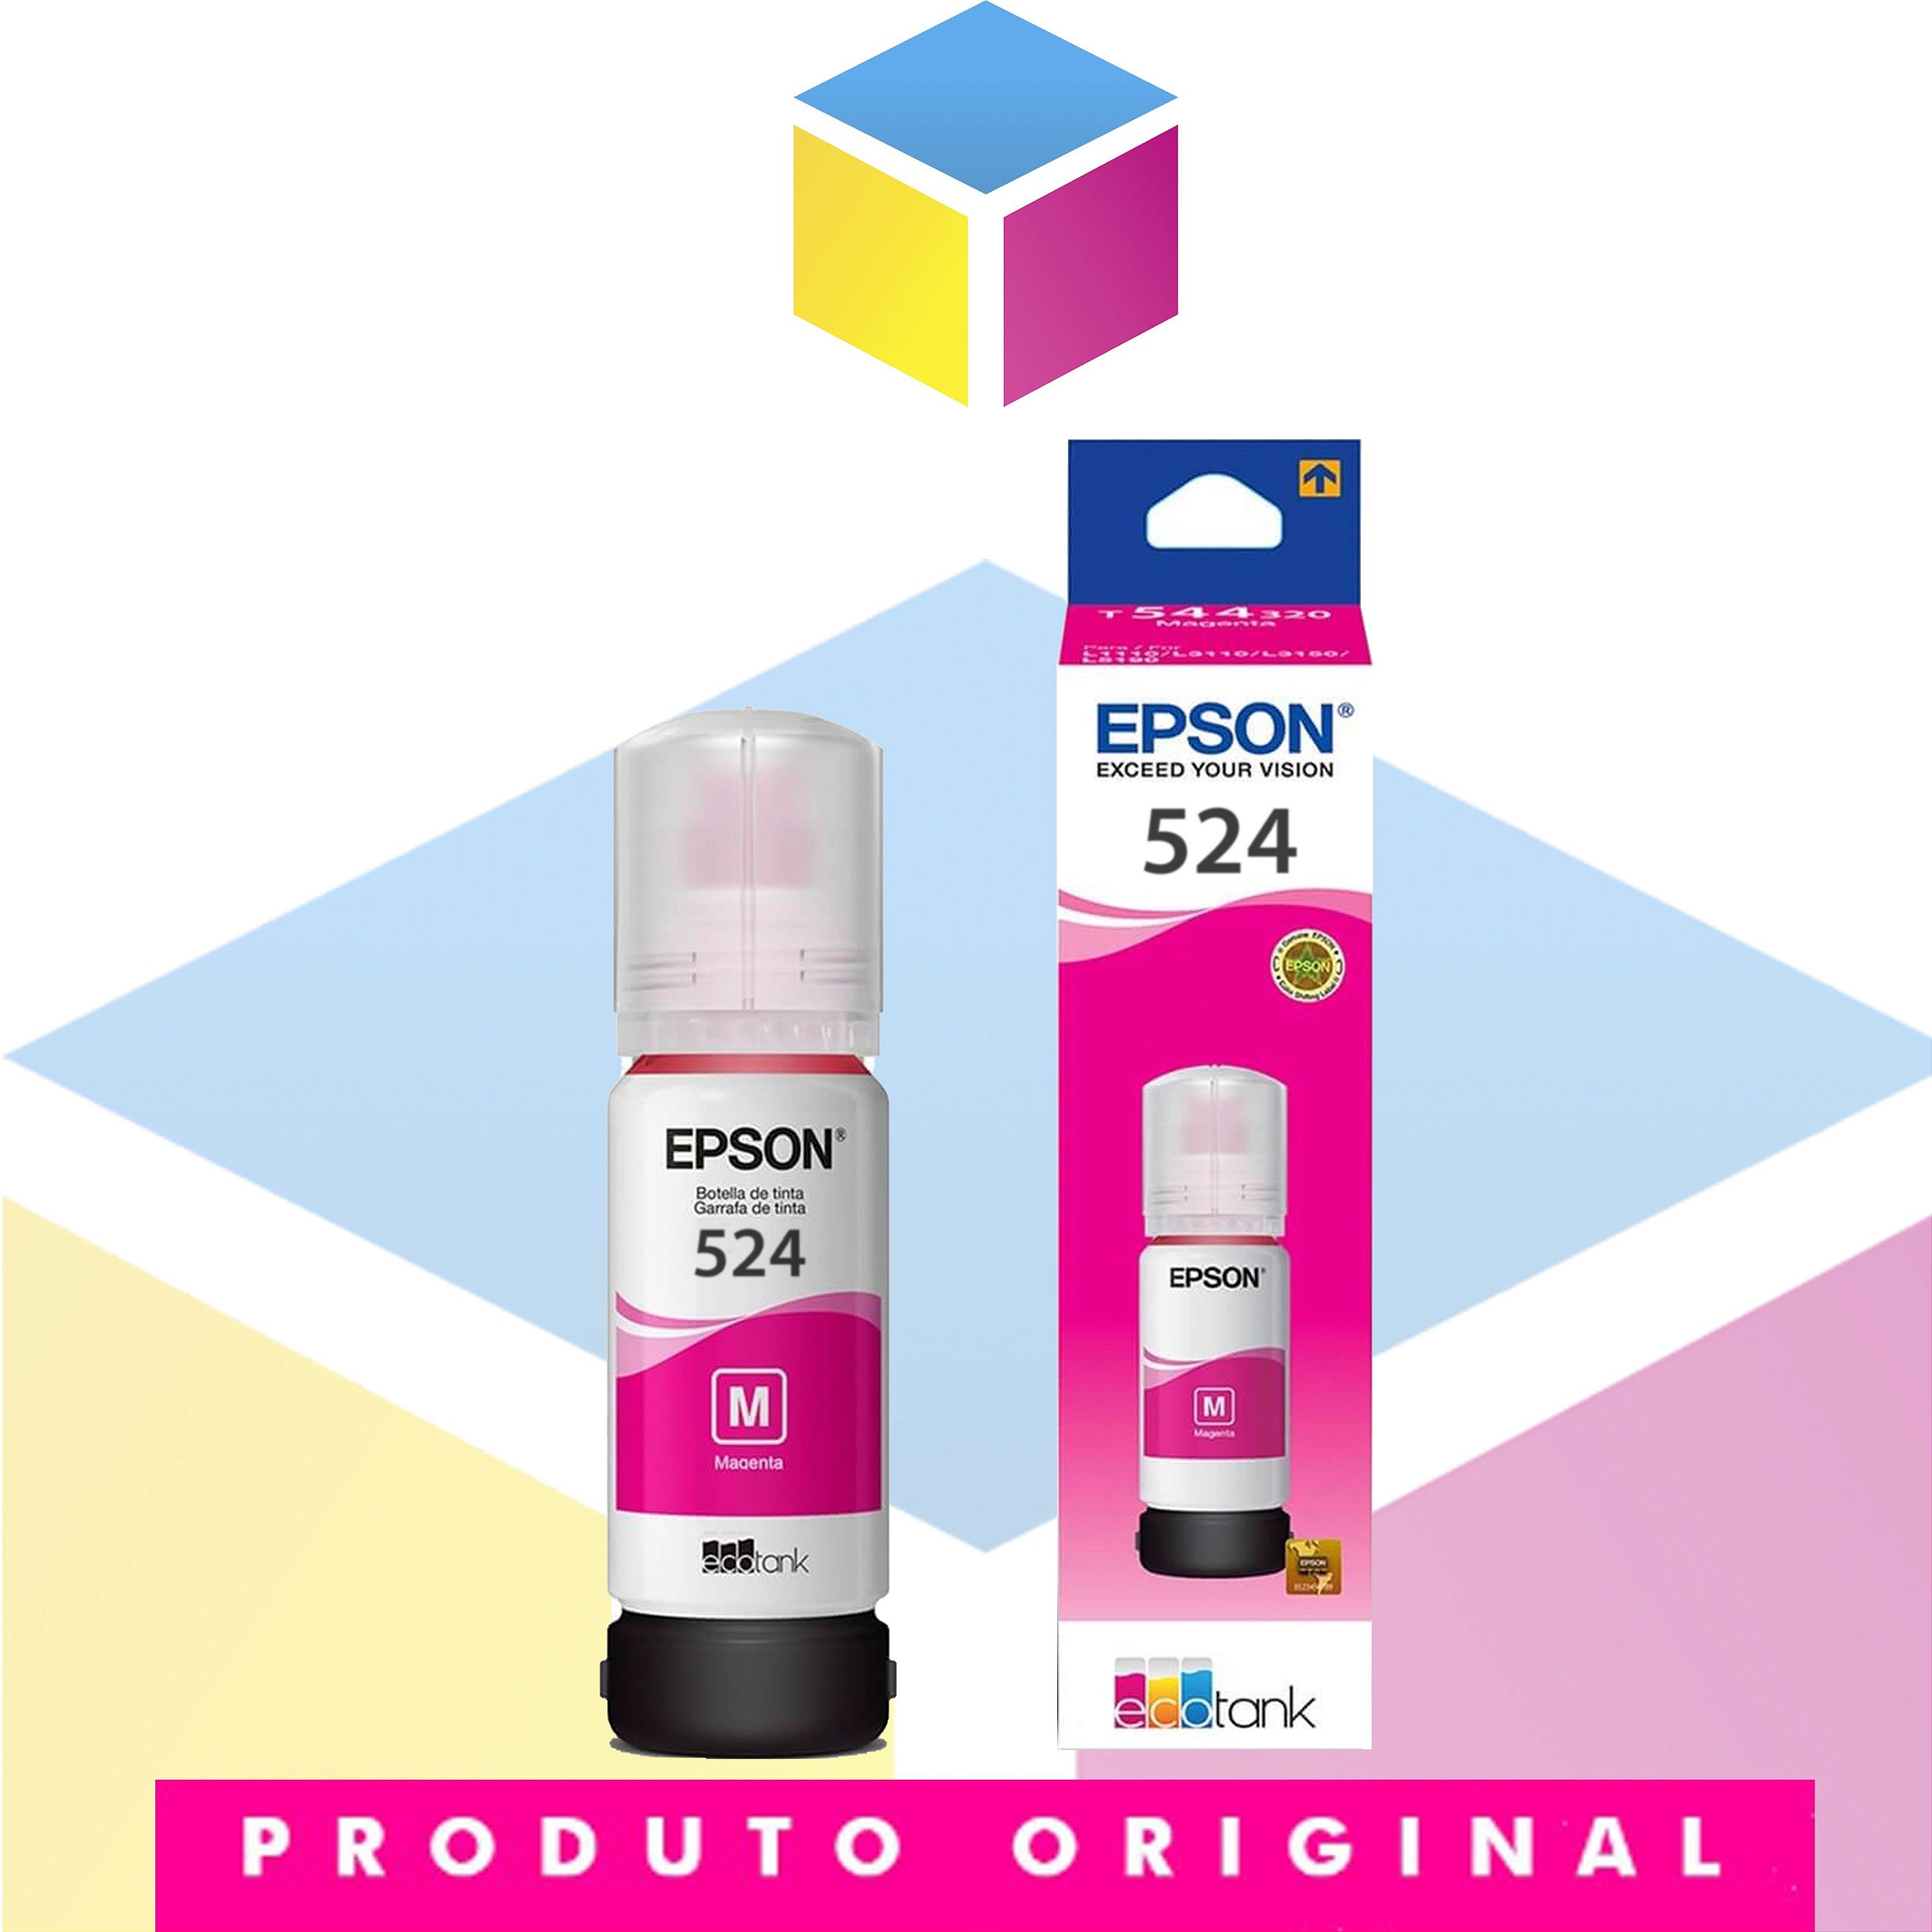 EPSON Botella de tinta magenta original EcoTank 673 - T673320